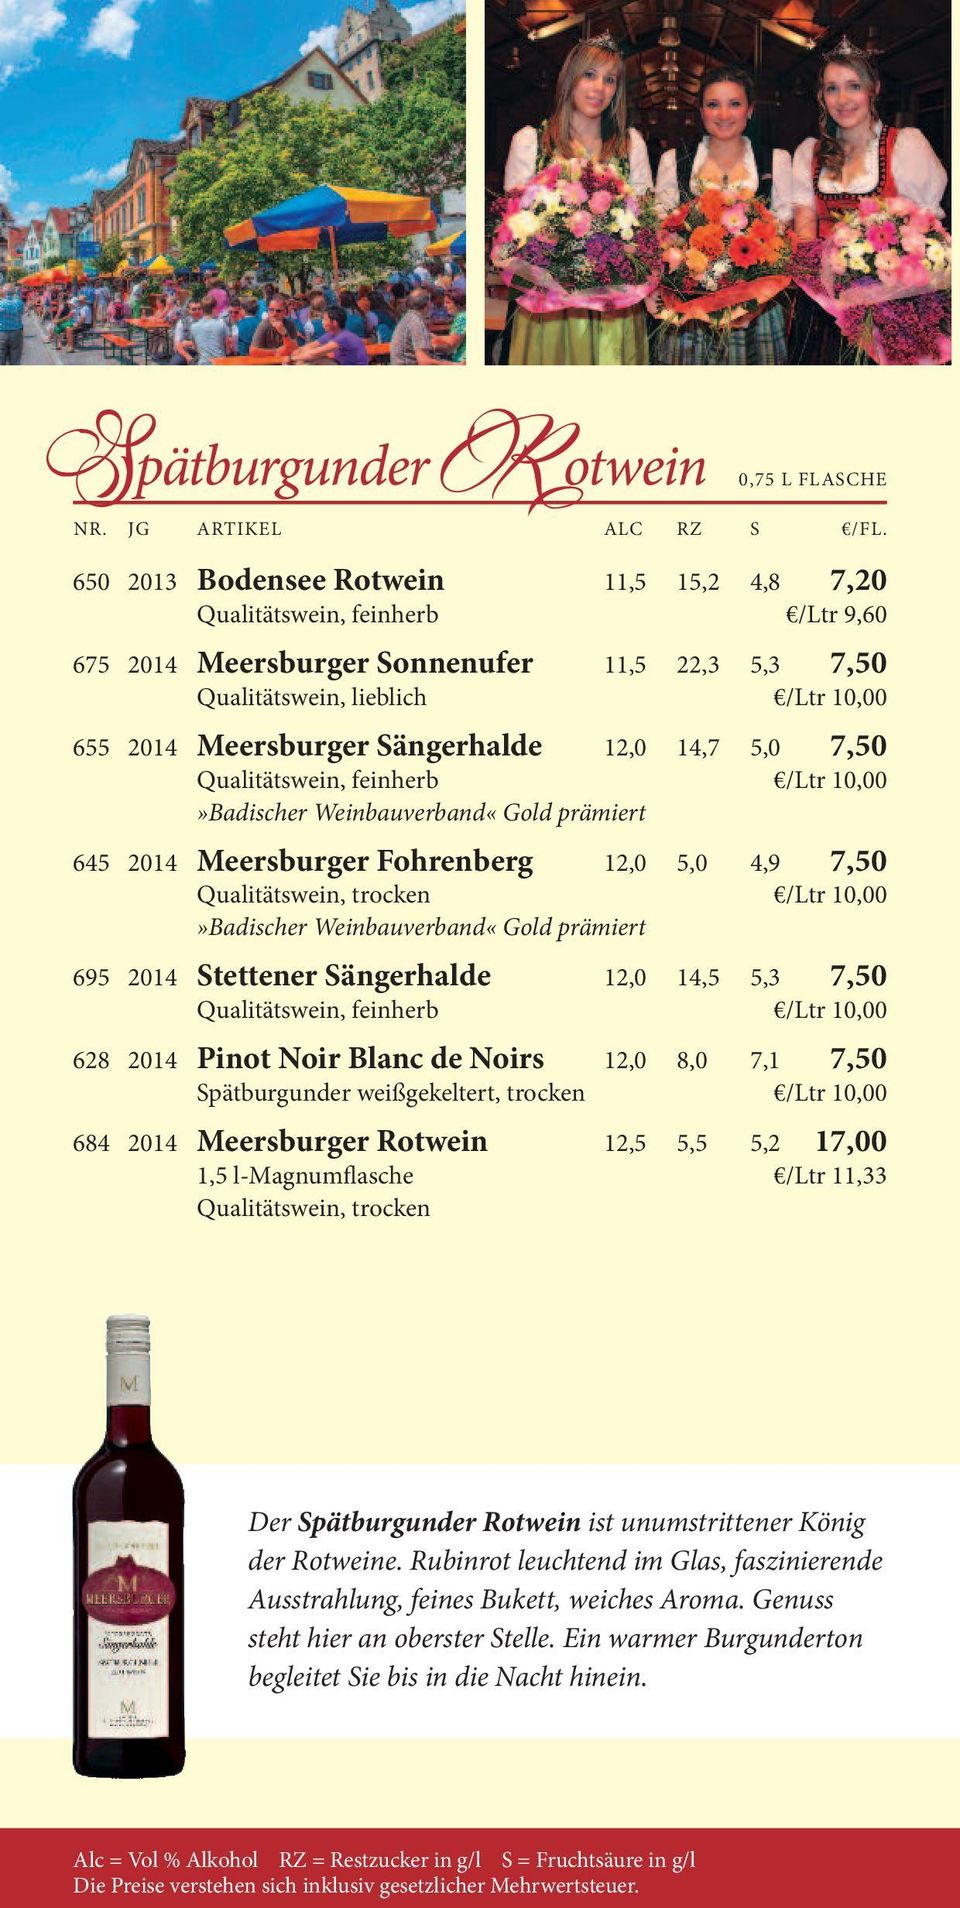 10,00»Badischer Weinbauverband«Gold prämiert 695 2014 Stettener Sängerhalde 12,0 14,5 5,3 7,50 Qualitätswein, feinherb /ltr 10,00 628 2014 Pinot Noir Blanc de Noirs 12,0 8,0 7,1 7,50 spätburgunder